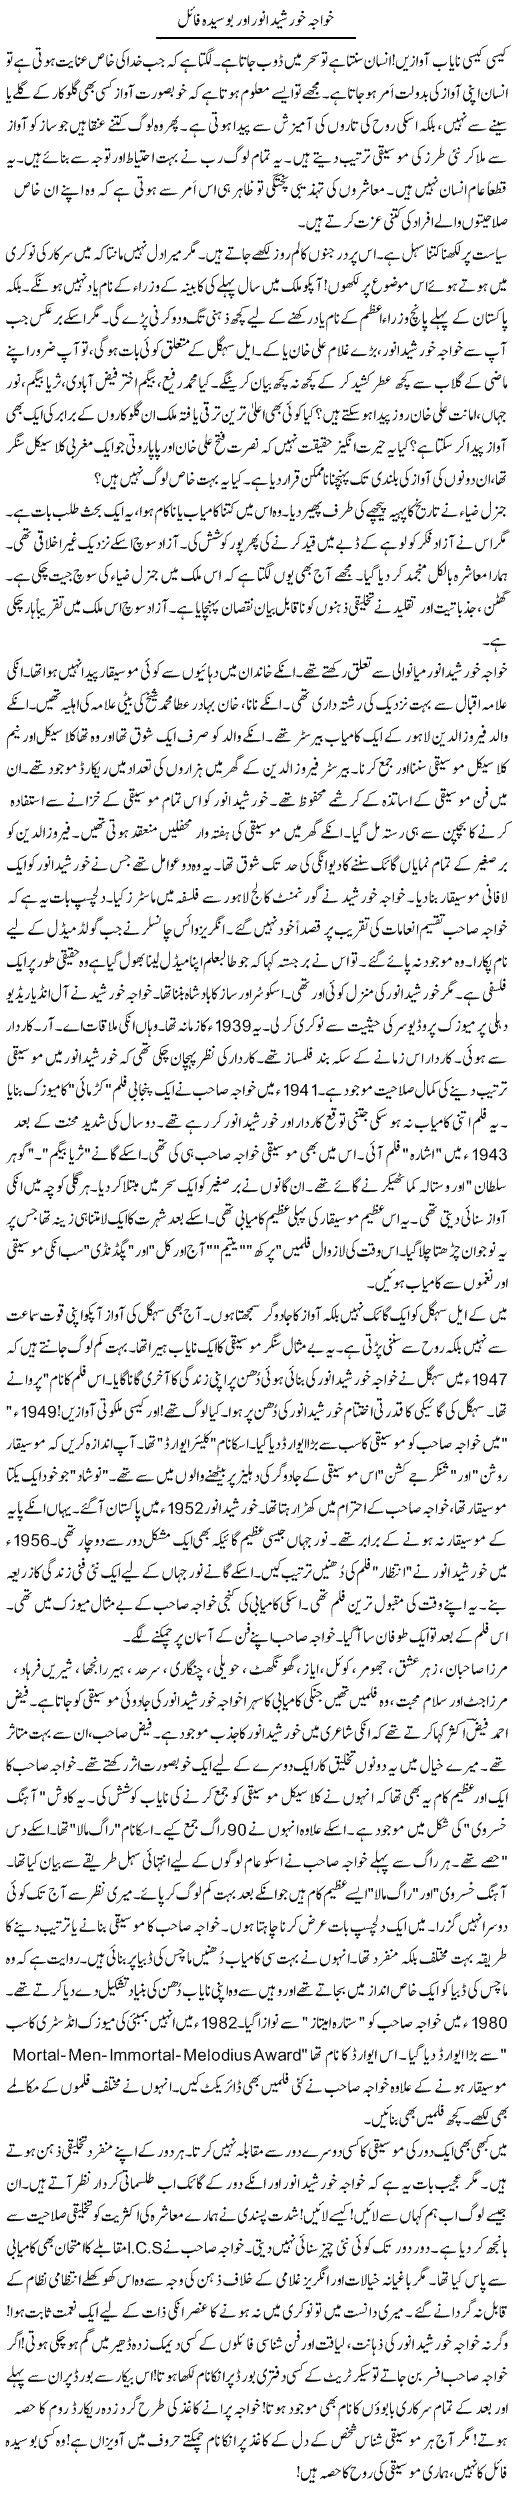 Khwaja Khursheed Anwar Our Bosida File | Rao Manzar Hayat | Daily Urdu Columns